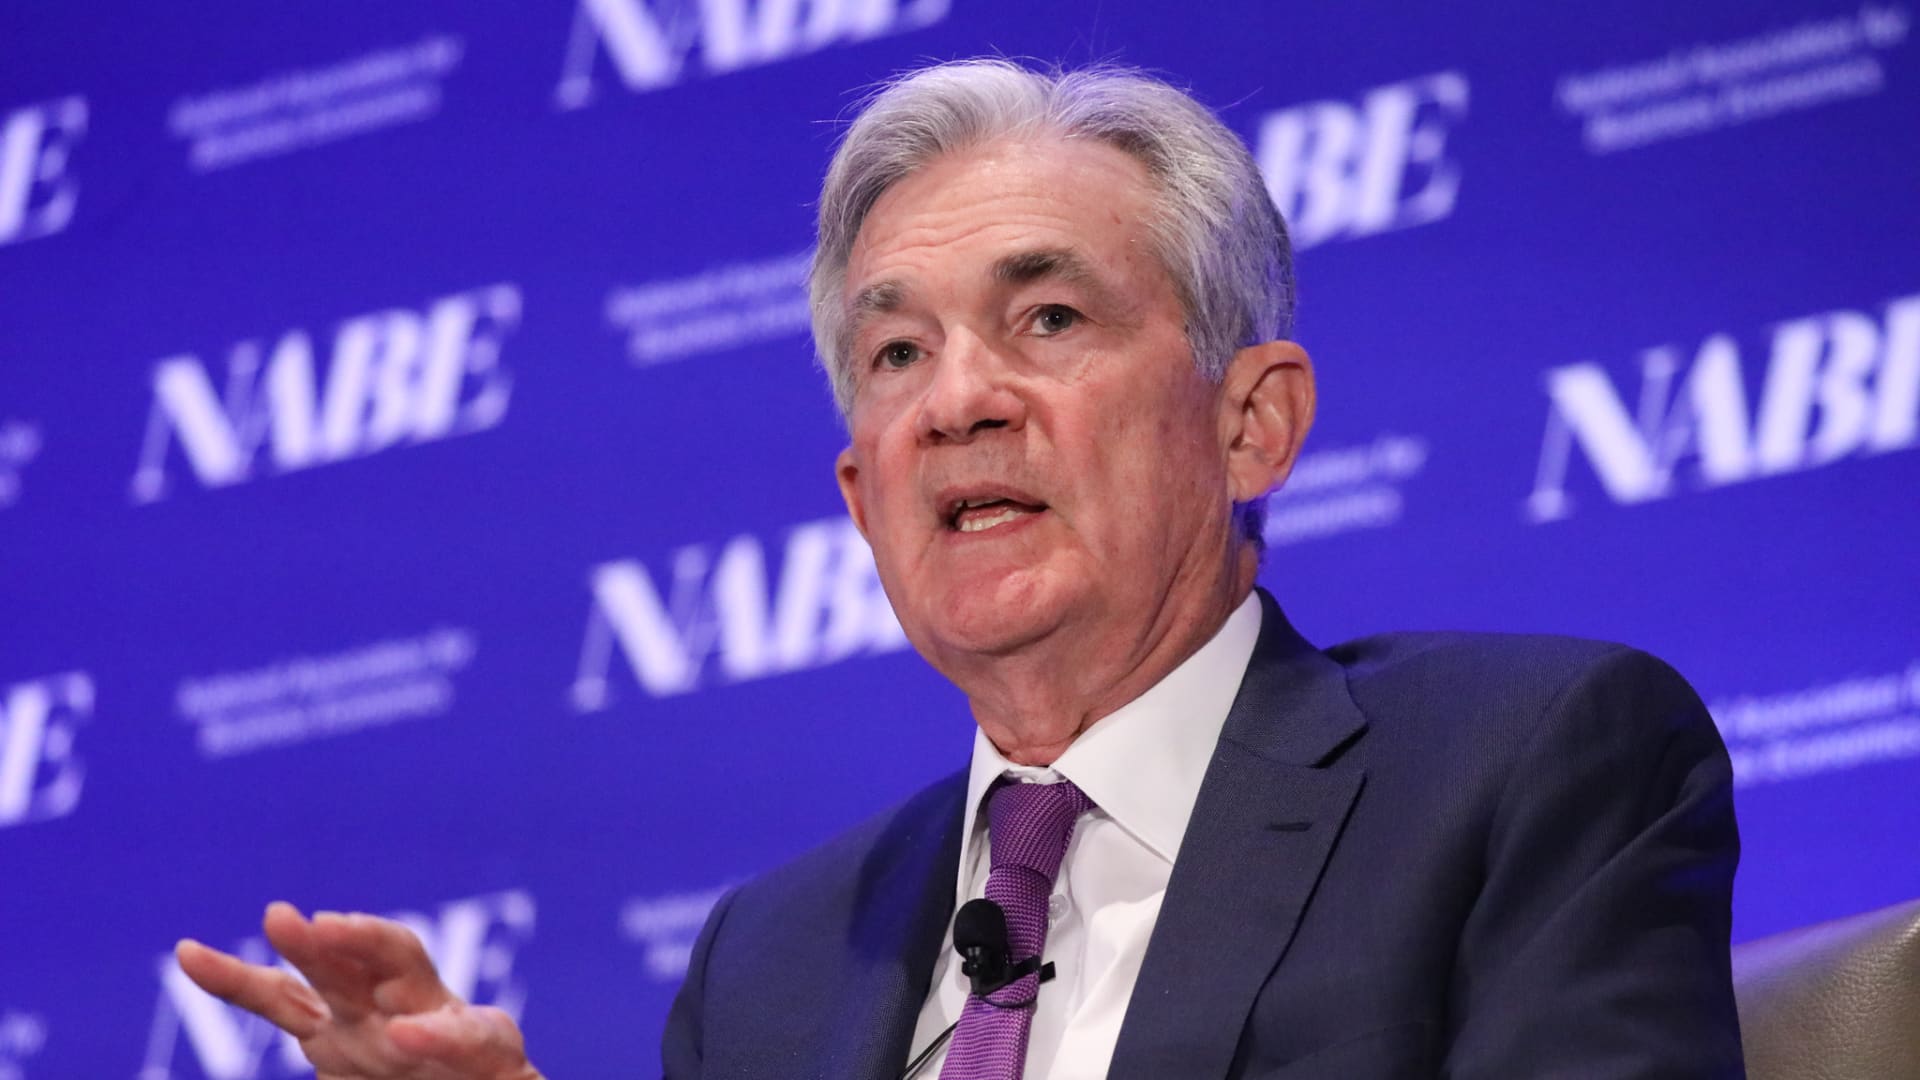 Watch Fed Chairman Jerome Powell speak live at IMF debate